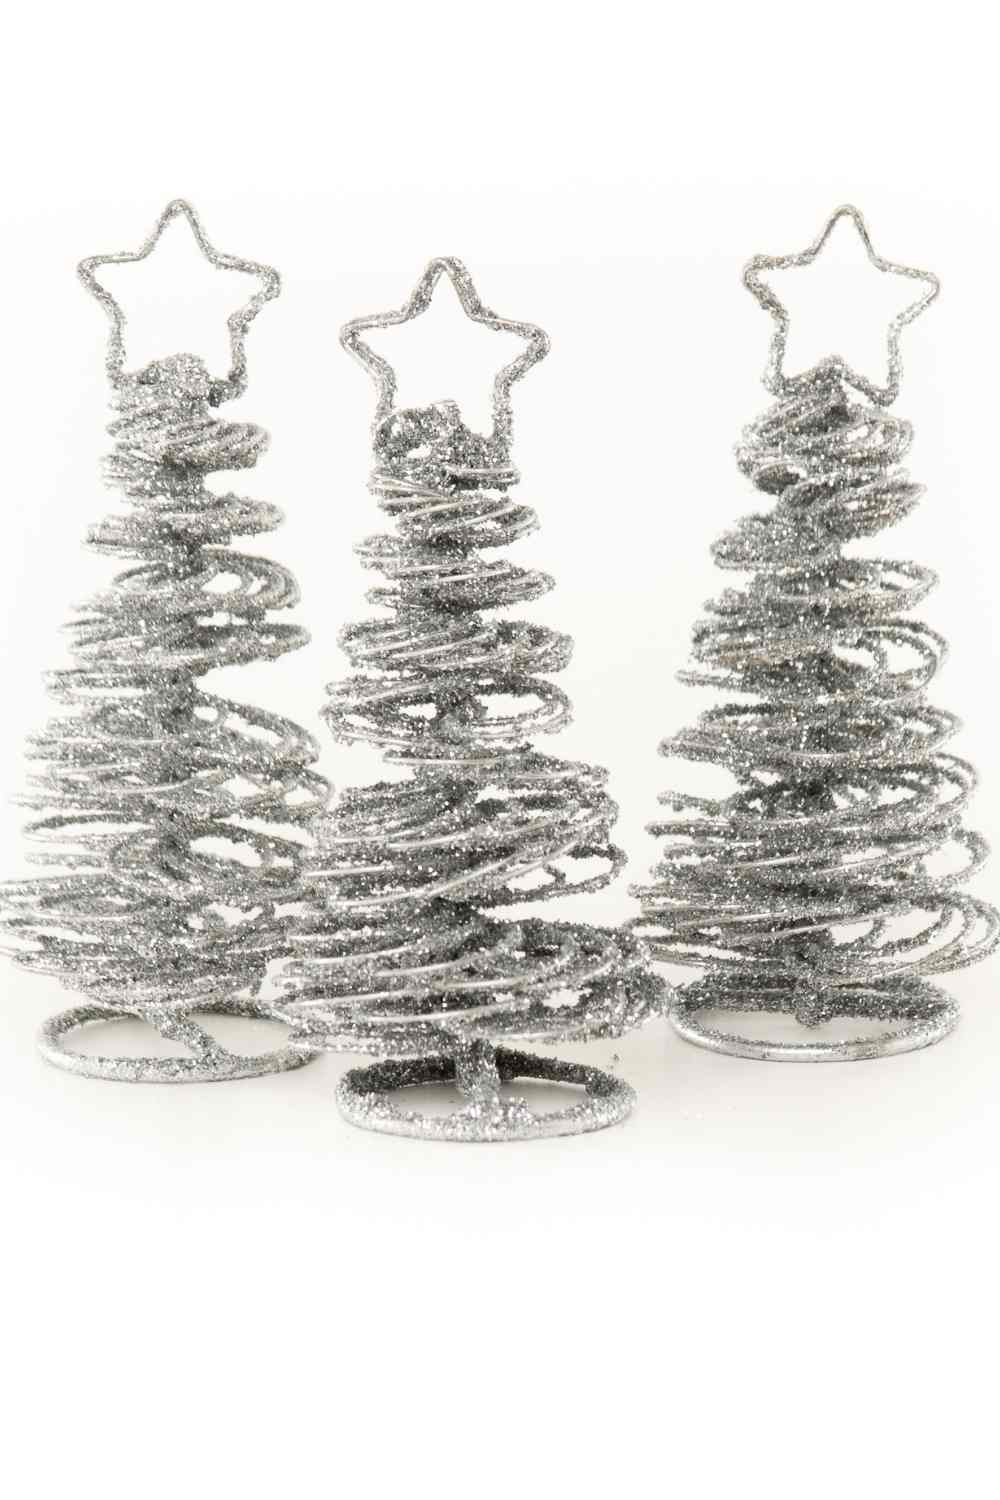 Shiny silver Christmas tree